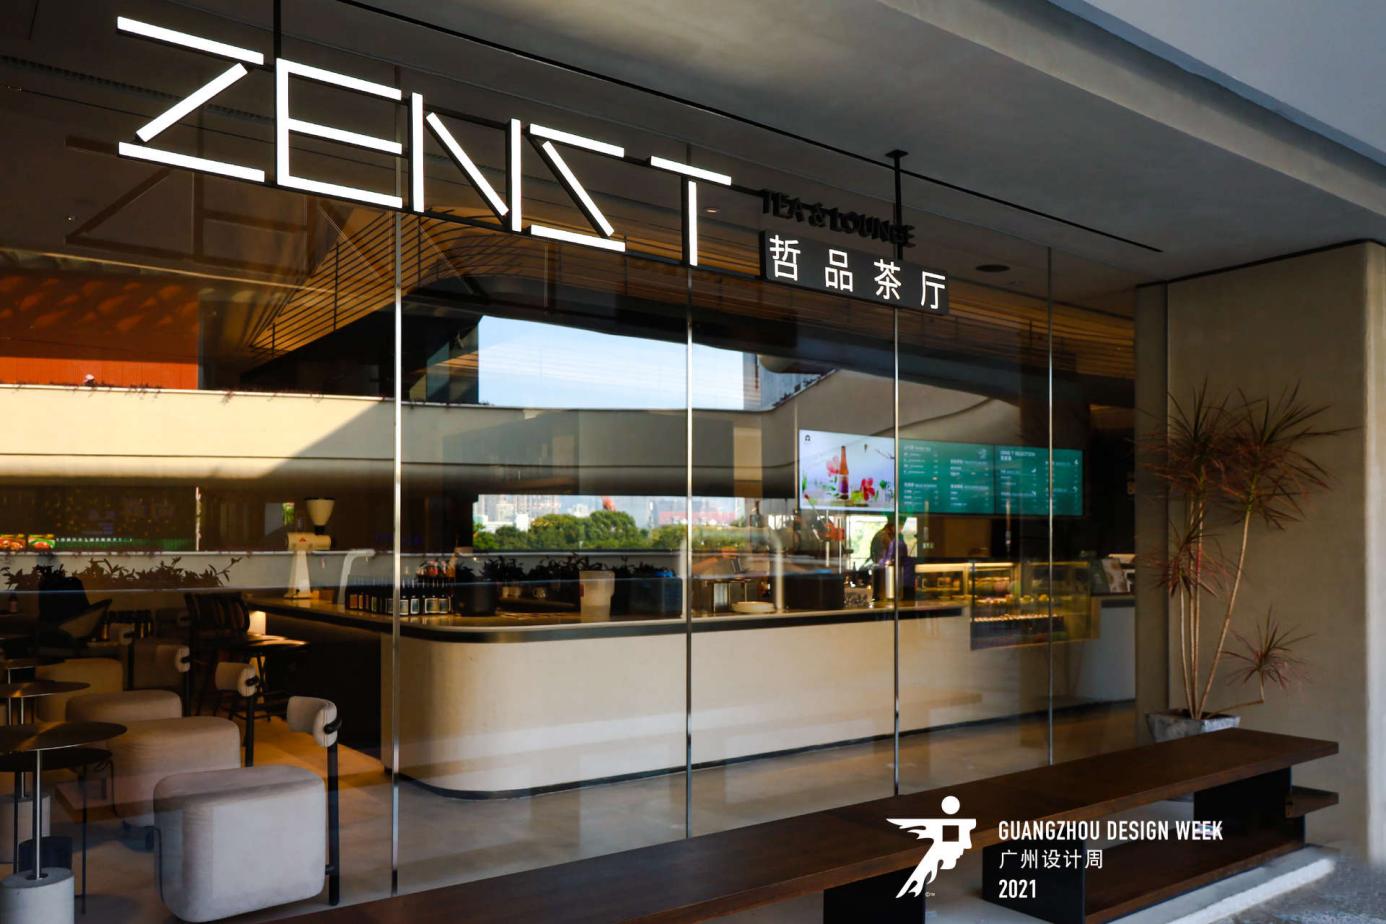 WYDF2021年度大中华区室内设计金奖之夜在ZENS T哲品茶厅圆满落幕